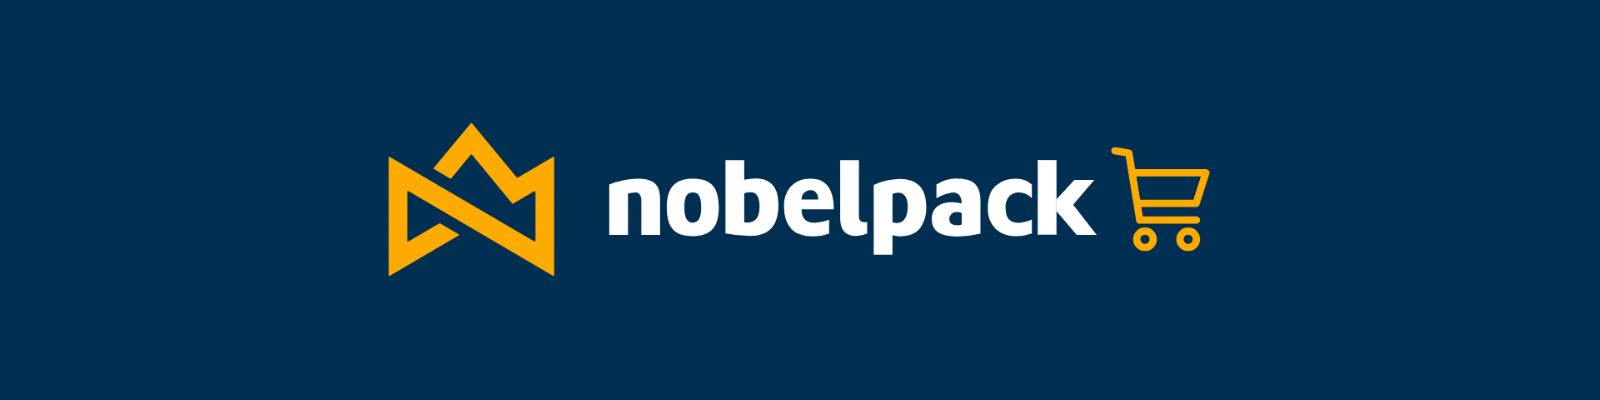 WhatsApp Nobelpack: Conheça todos os canais disponíveis!